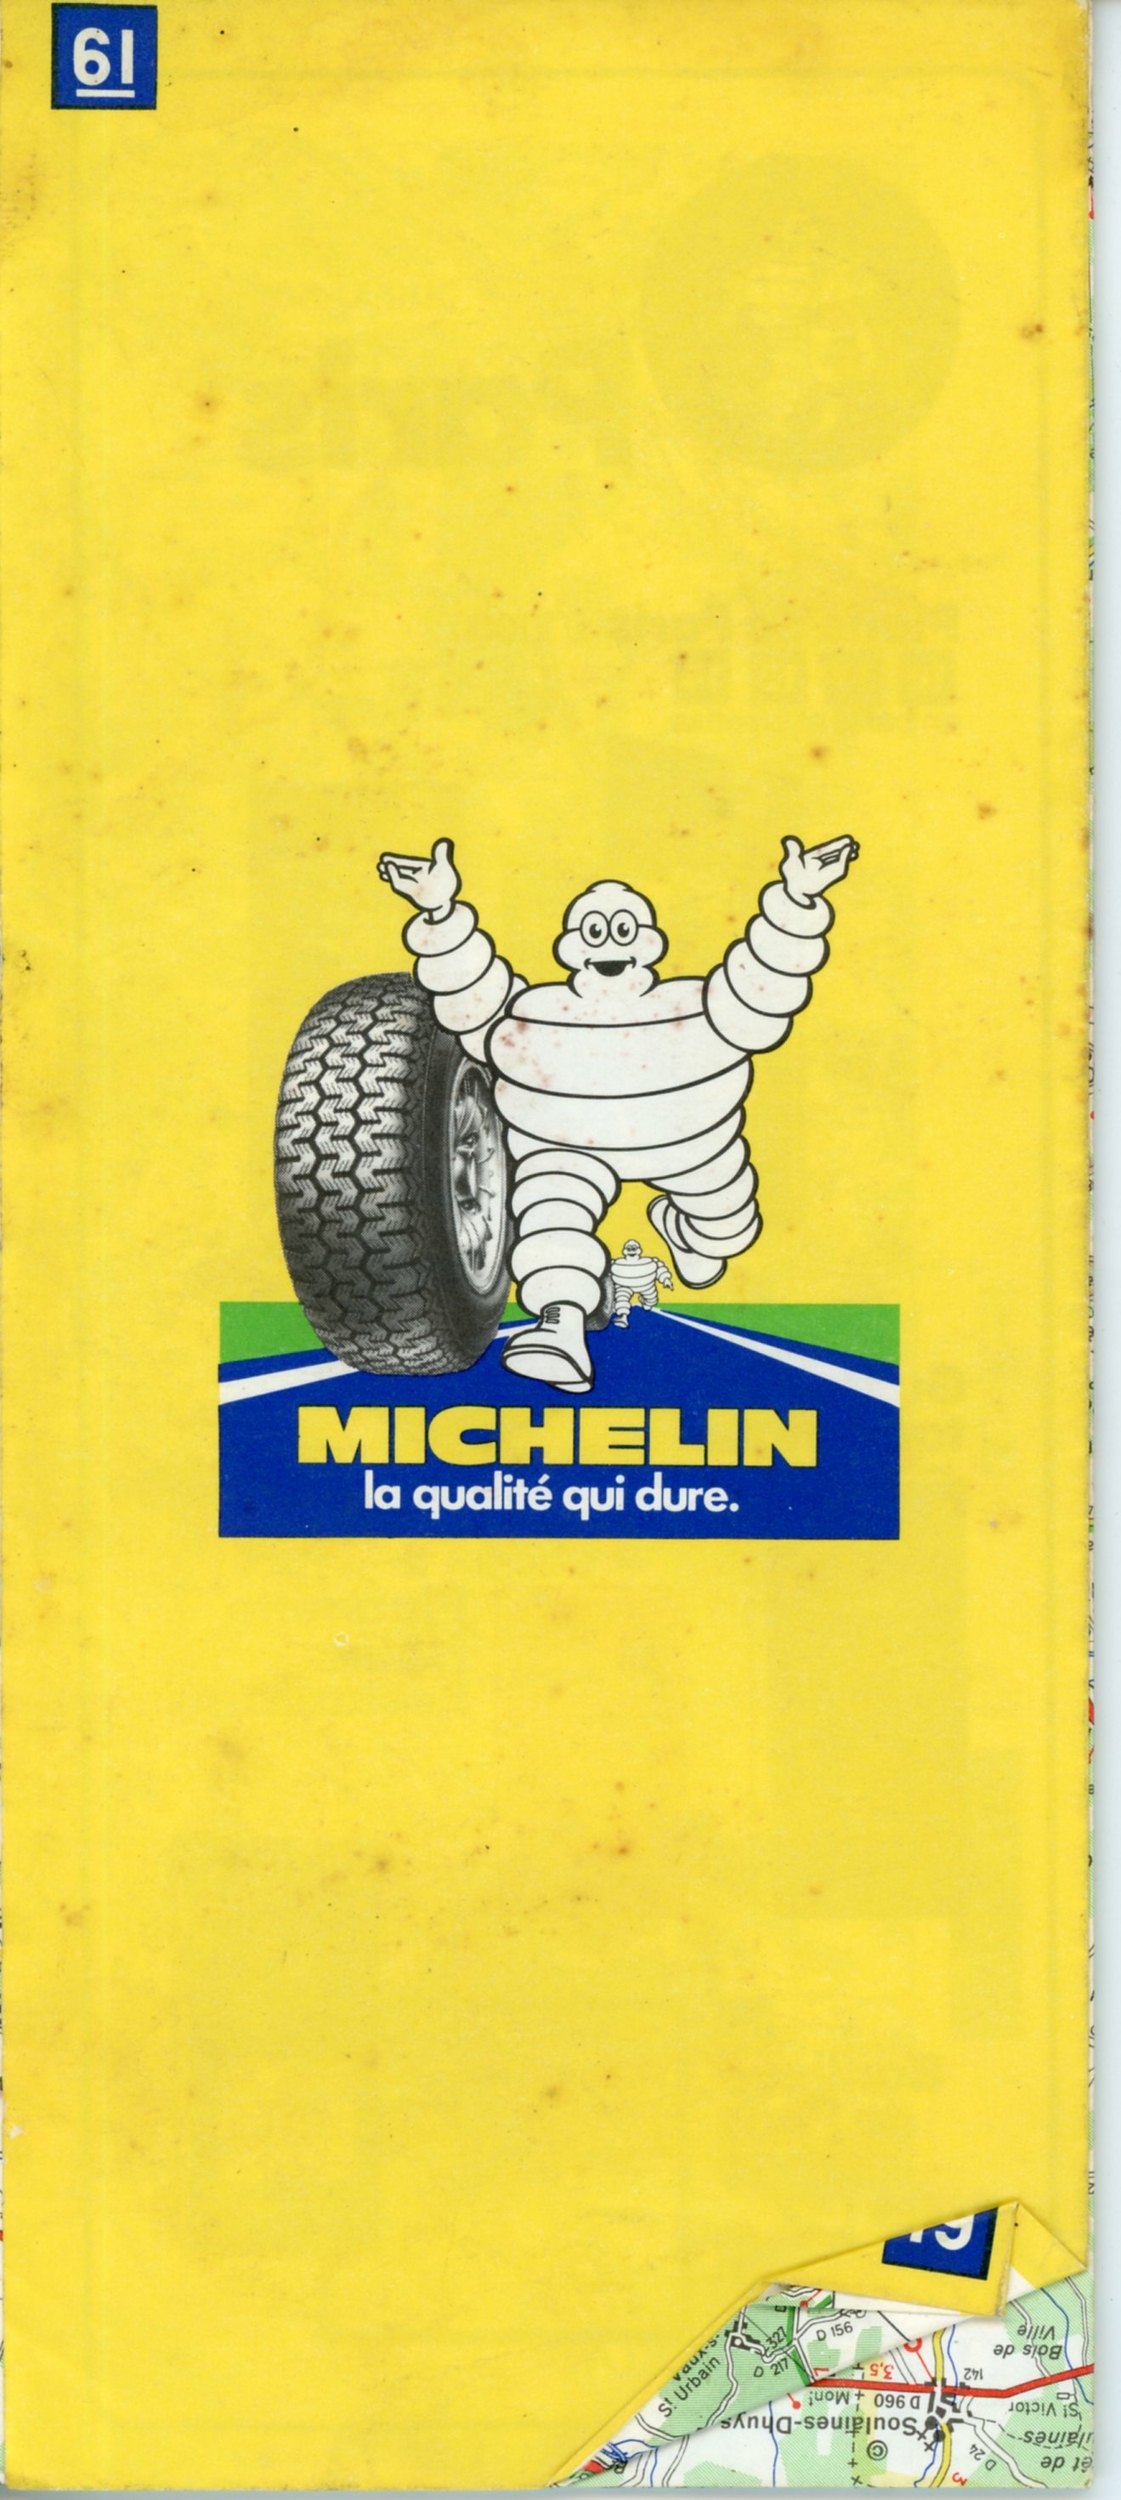 CARTE-ROUTIÈRE-MICHELIN-61-1984-LEMASTERBROCKERS-COLLECTION-CARTE-MICHELIN